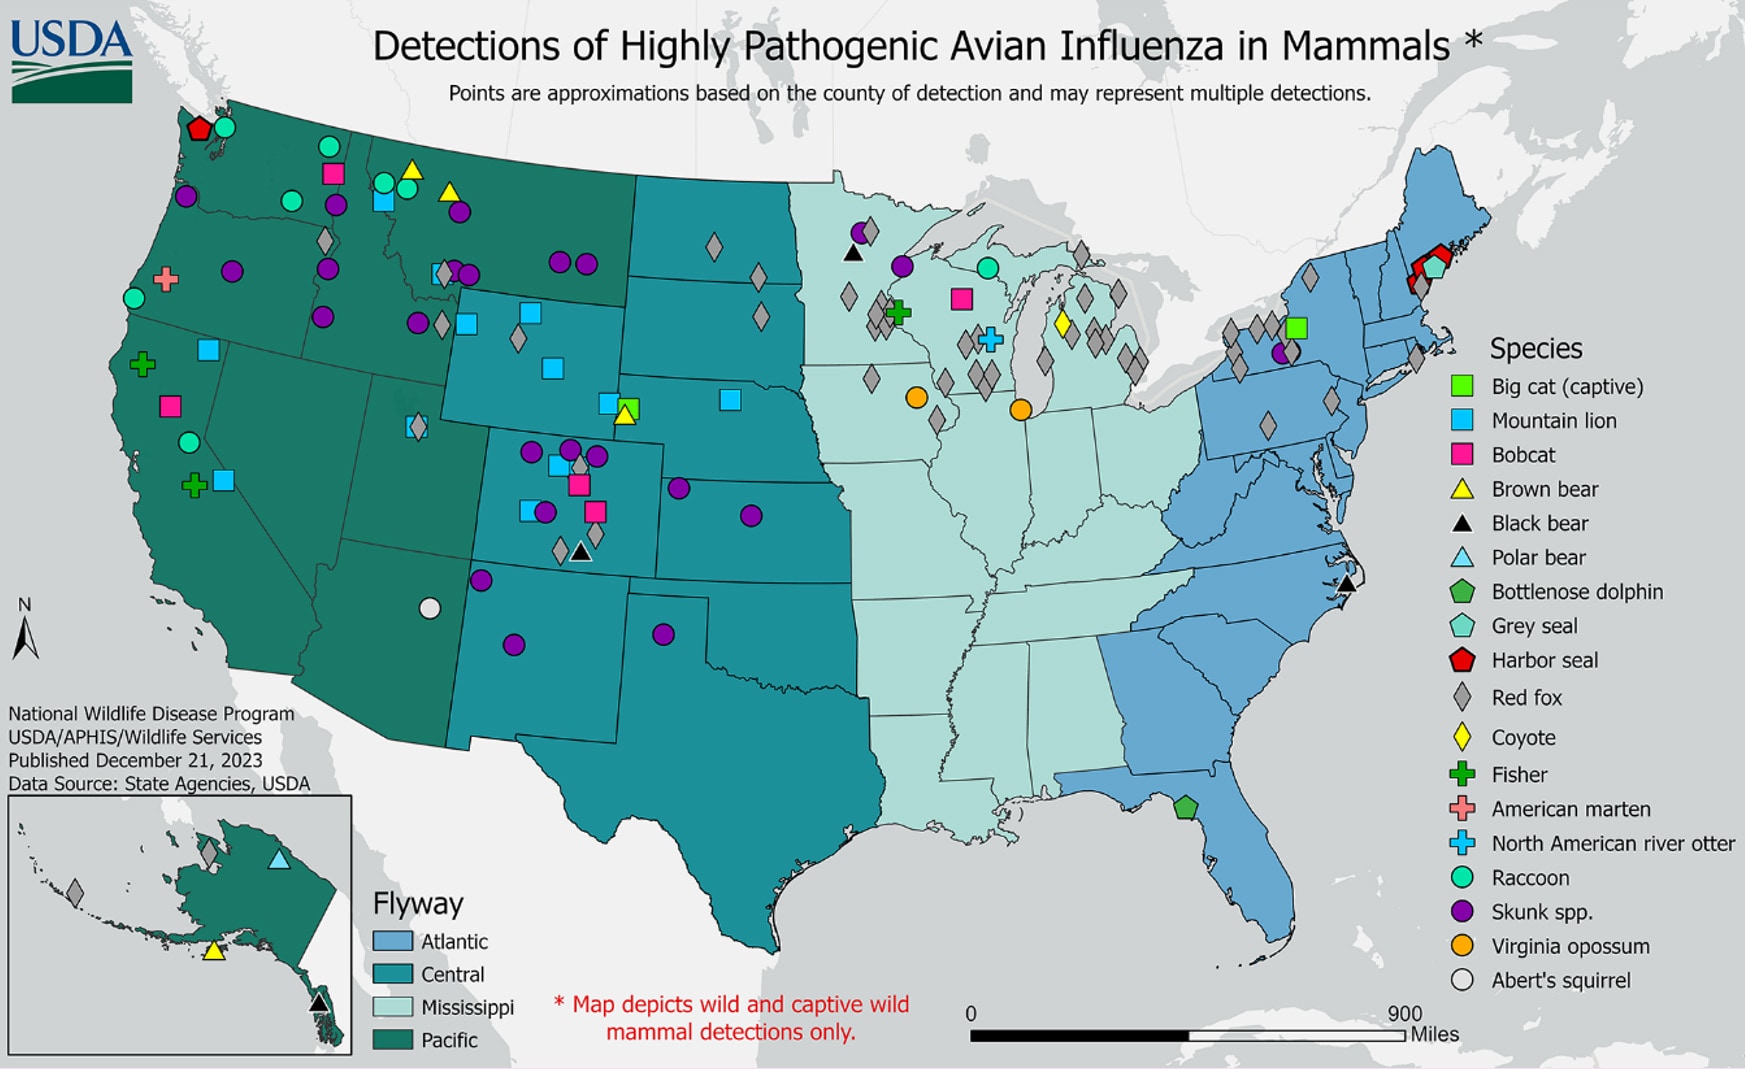 Detection of Highly Pathogenic Avian Influenza in Mammals map